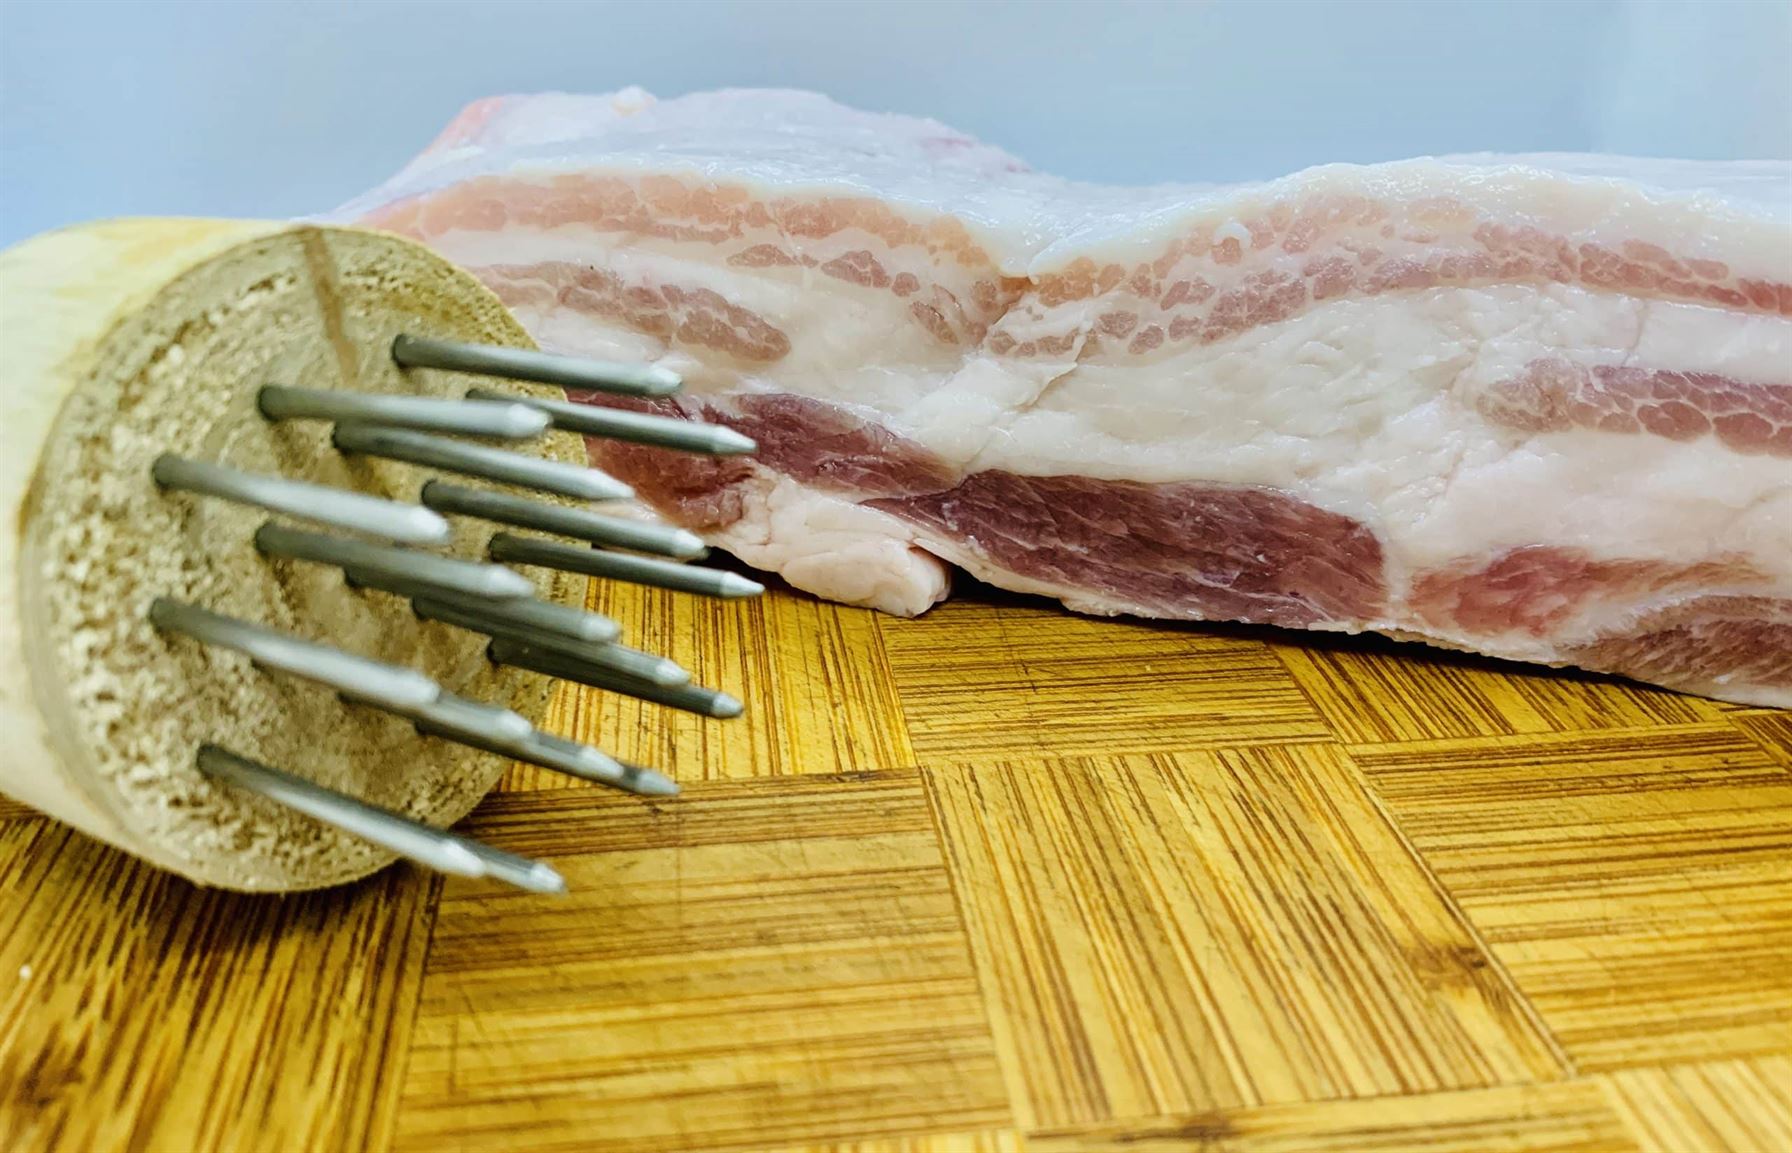 ChillaxBBQ Stay@Home Recipes #49 - Slow-Roast Hokkaido Pork Belly